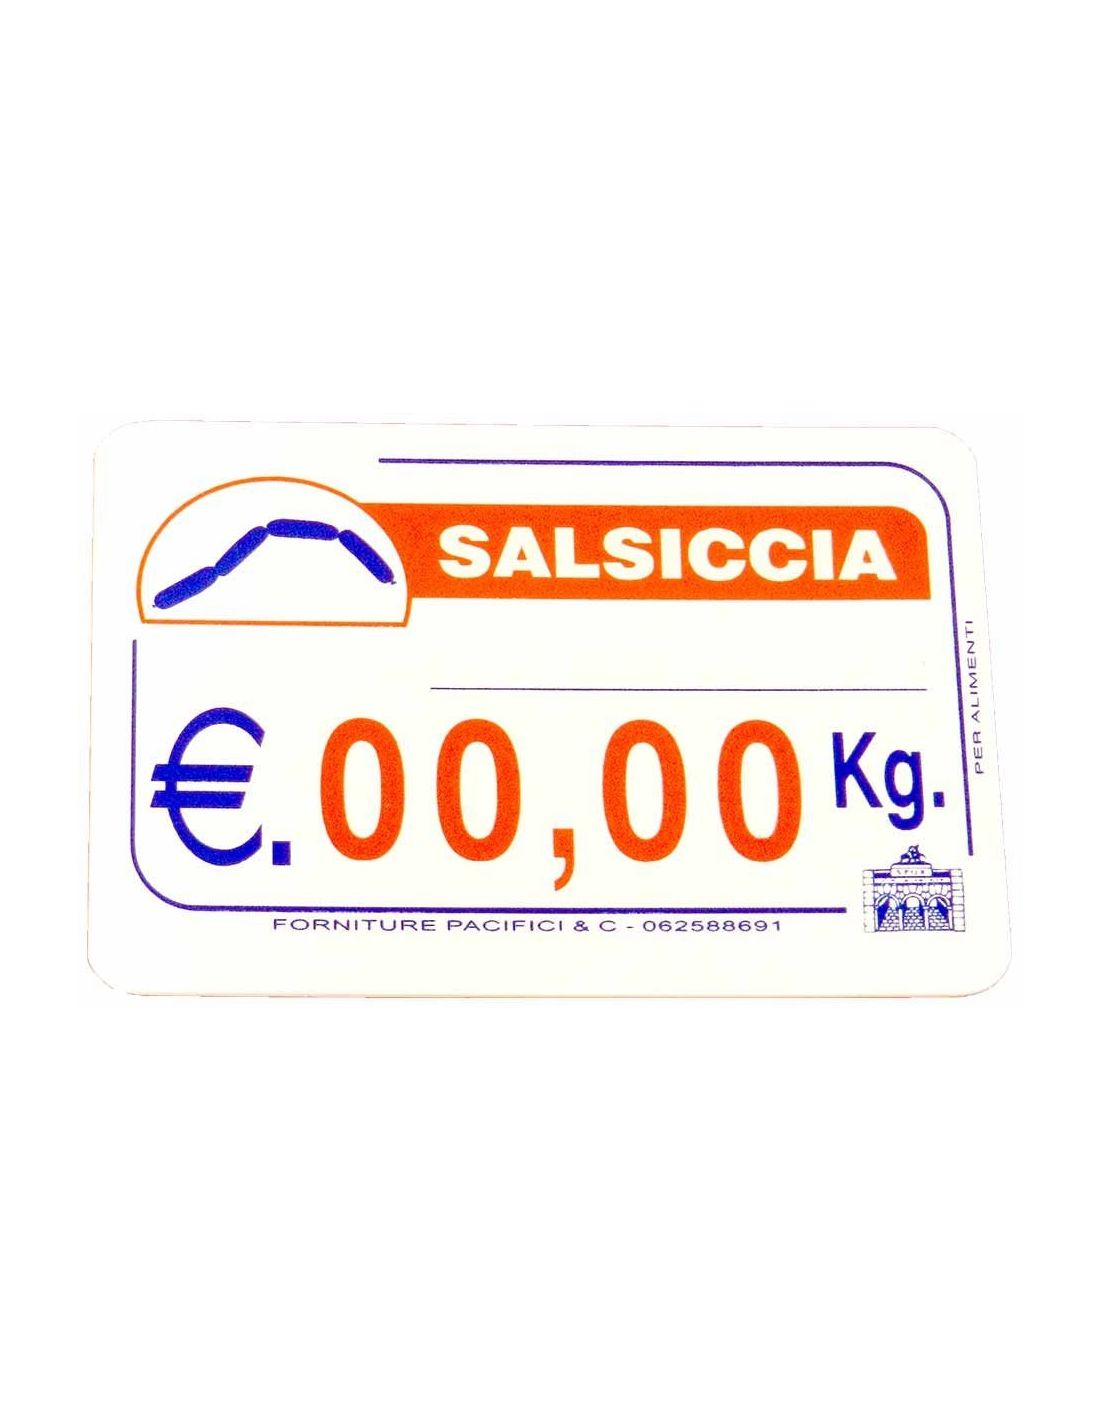 Cartellino segnaprezzi per Macellerie "Salsiccia"